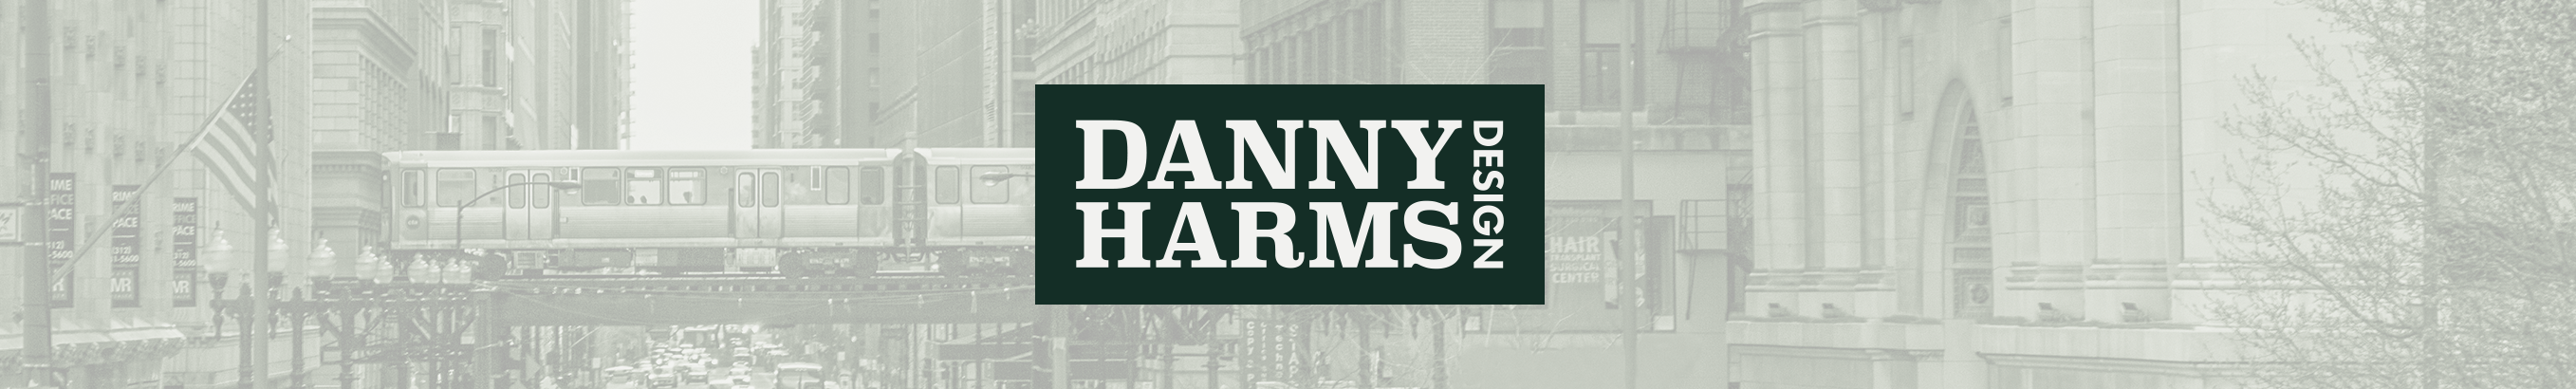 Danny Harmss profilbanner